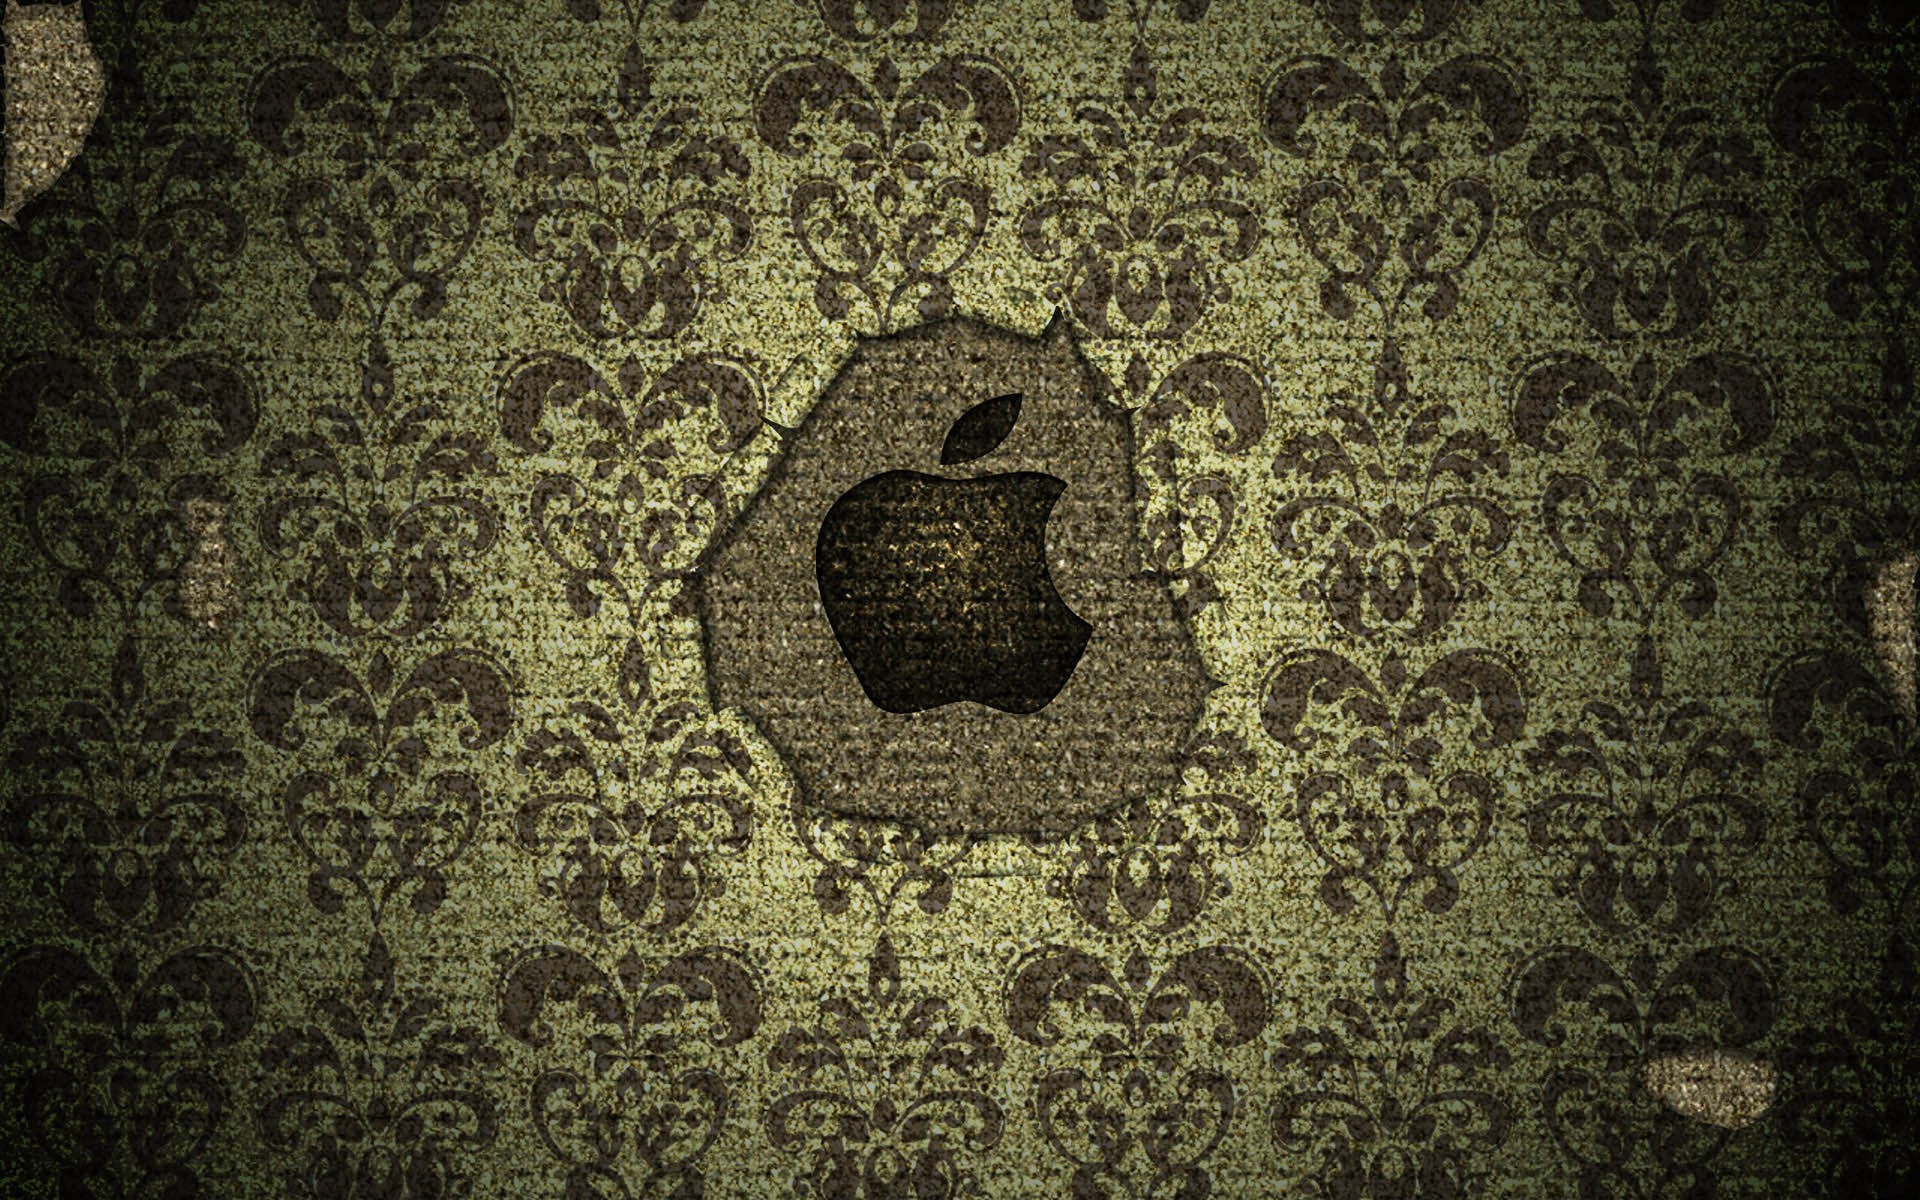 Apple Inc., Technology Wallpaper